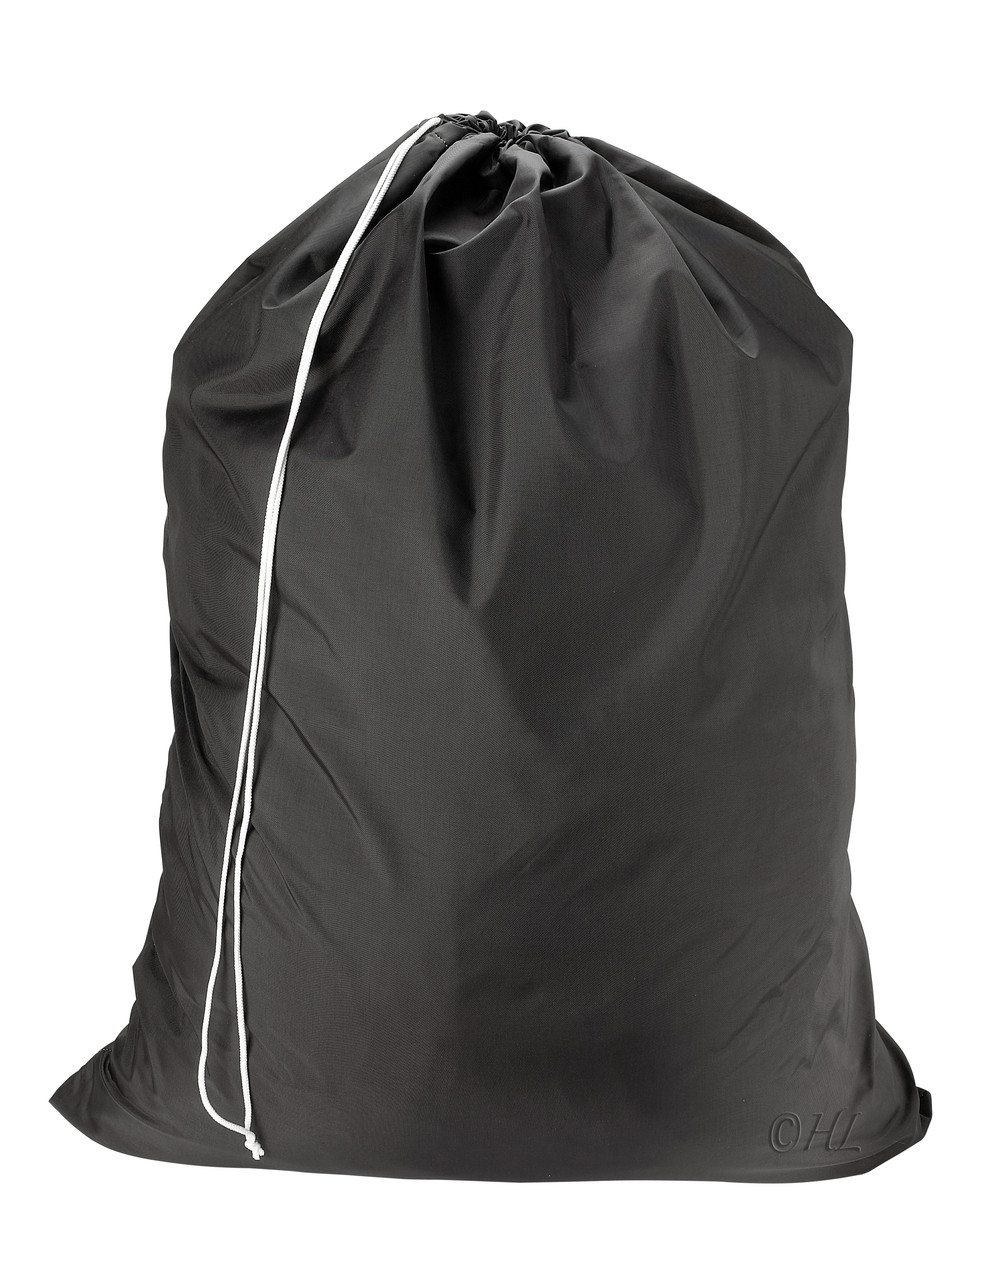 Nylon Mesh Laundry Bag 16